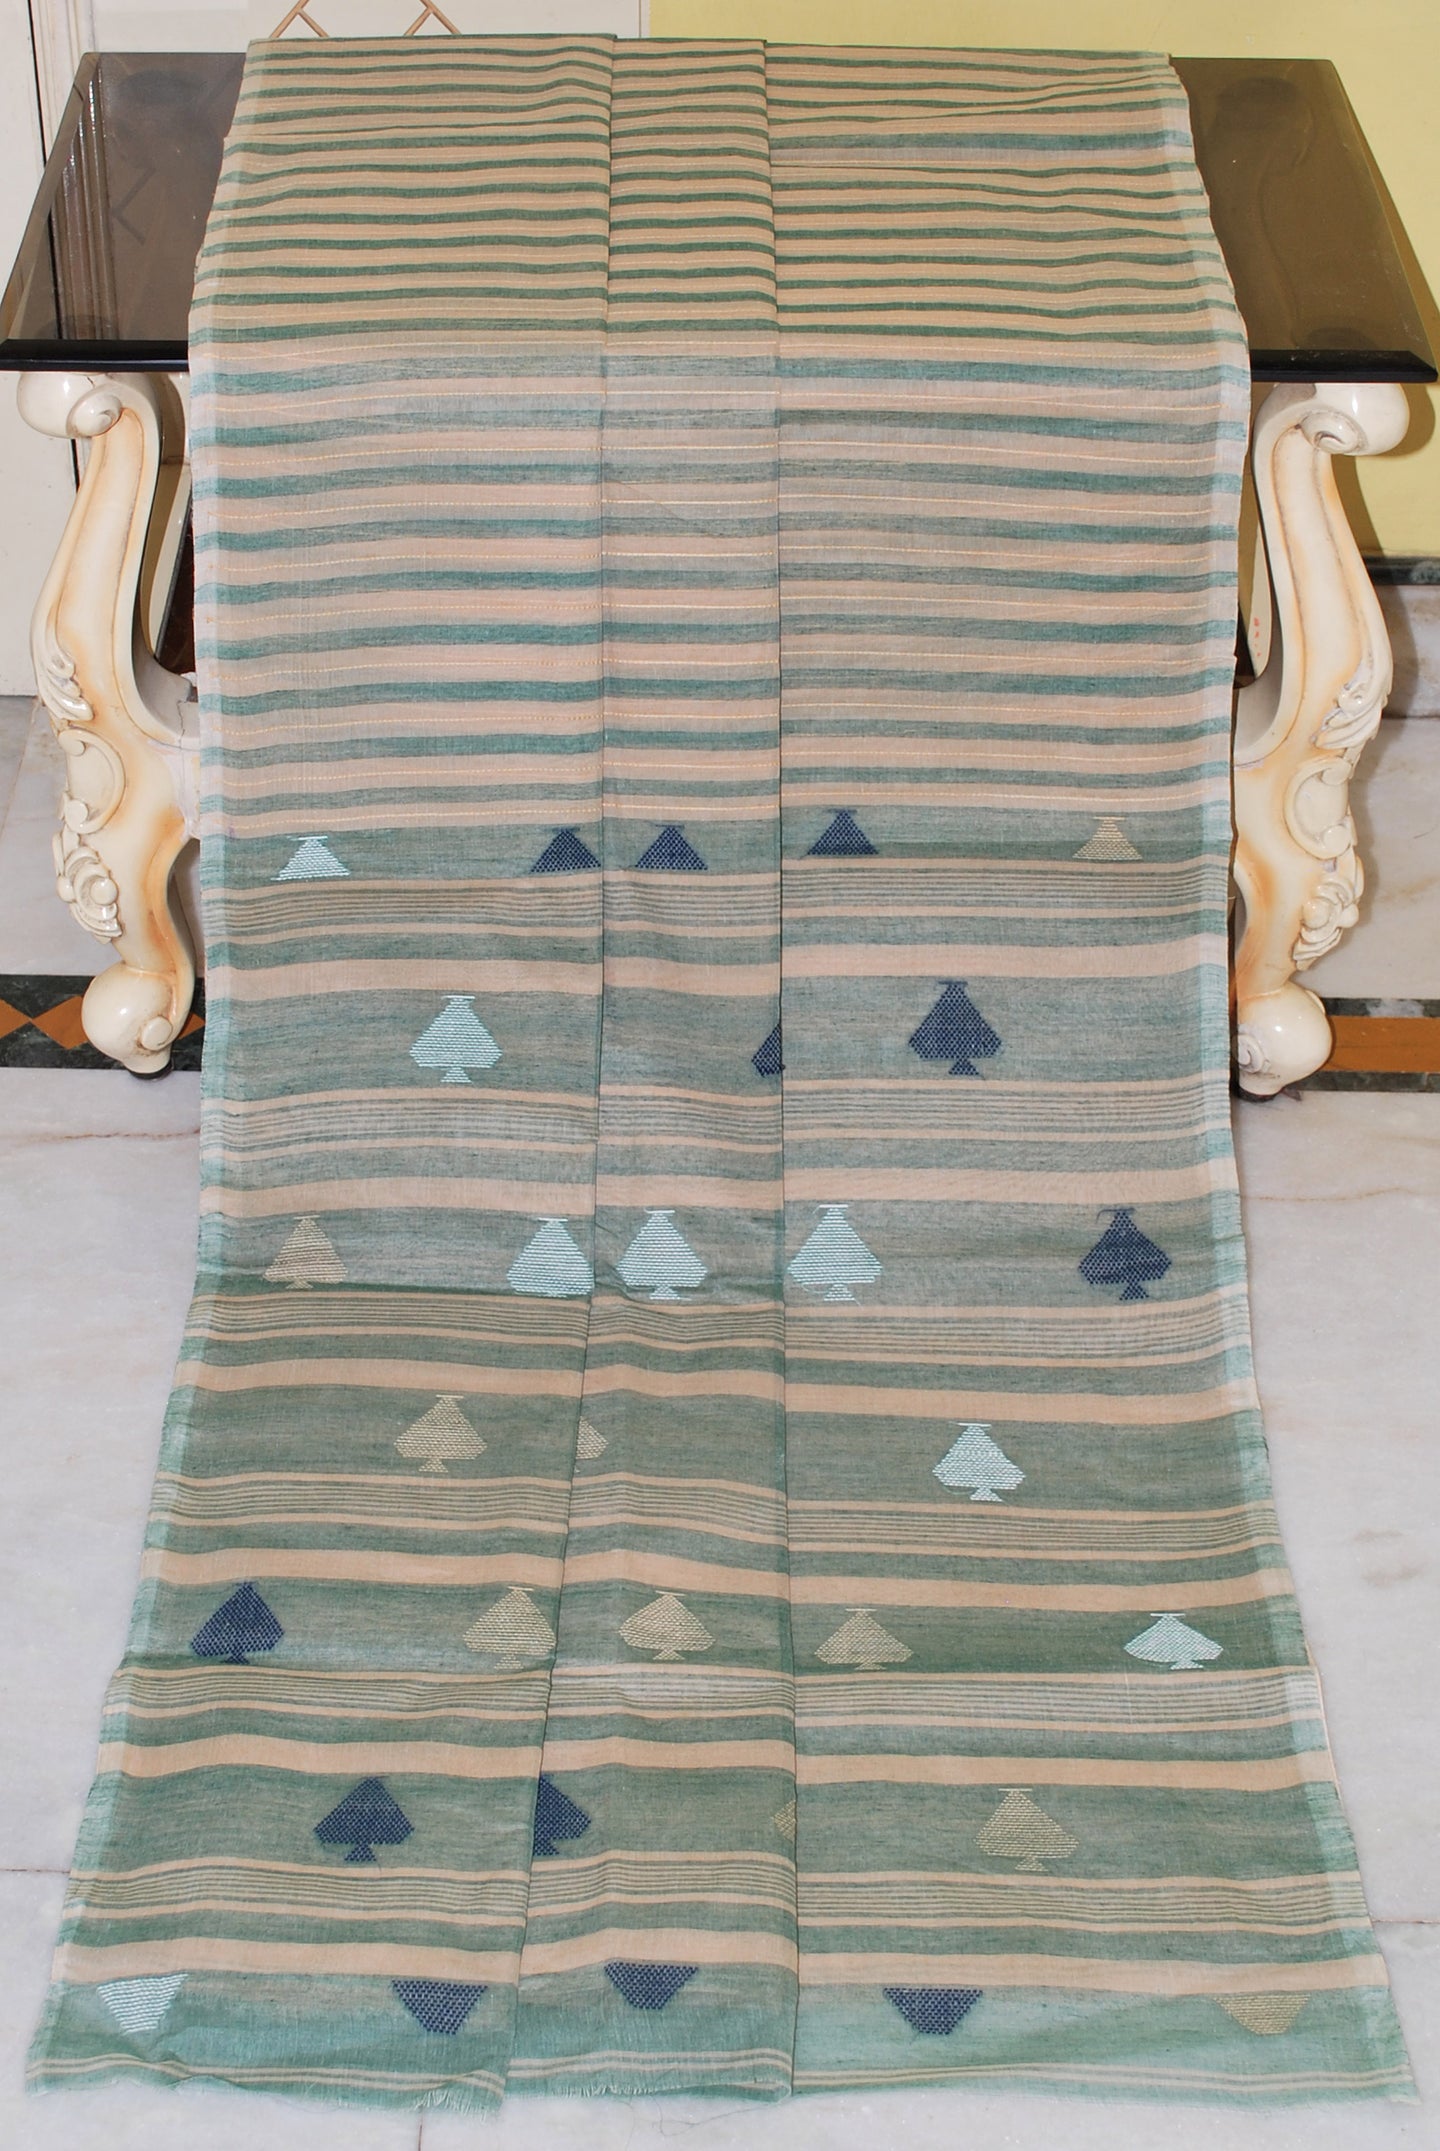 Horizontal Stripes Chainstitch Thread Work with Spade Nakshi  Motif Cotton Jamdani Saree in Beige, Green, Off White and Black